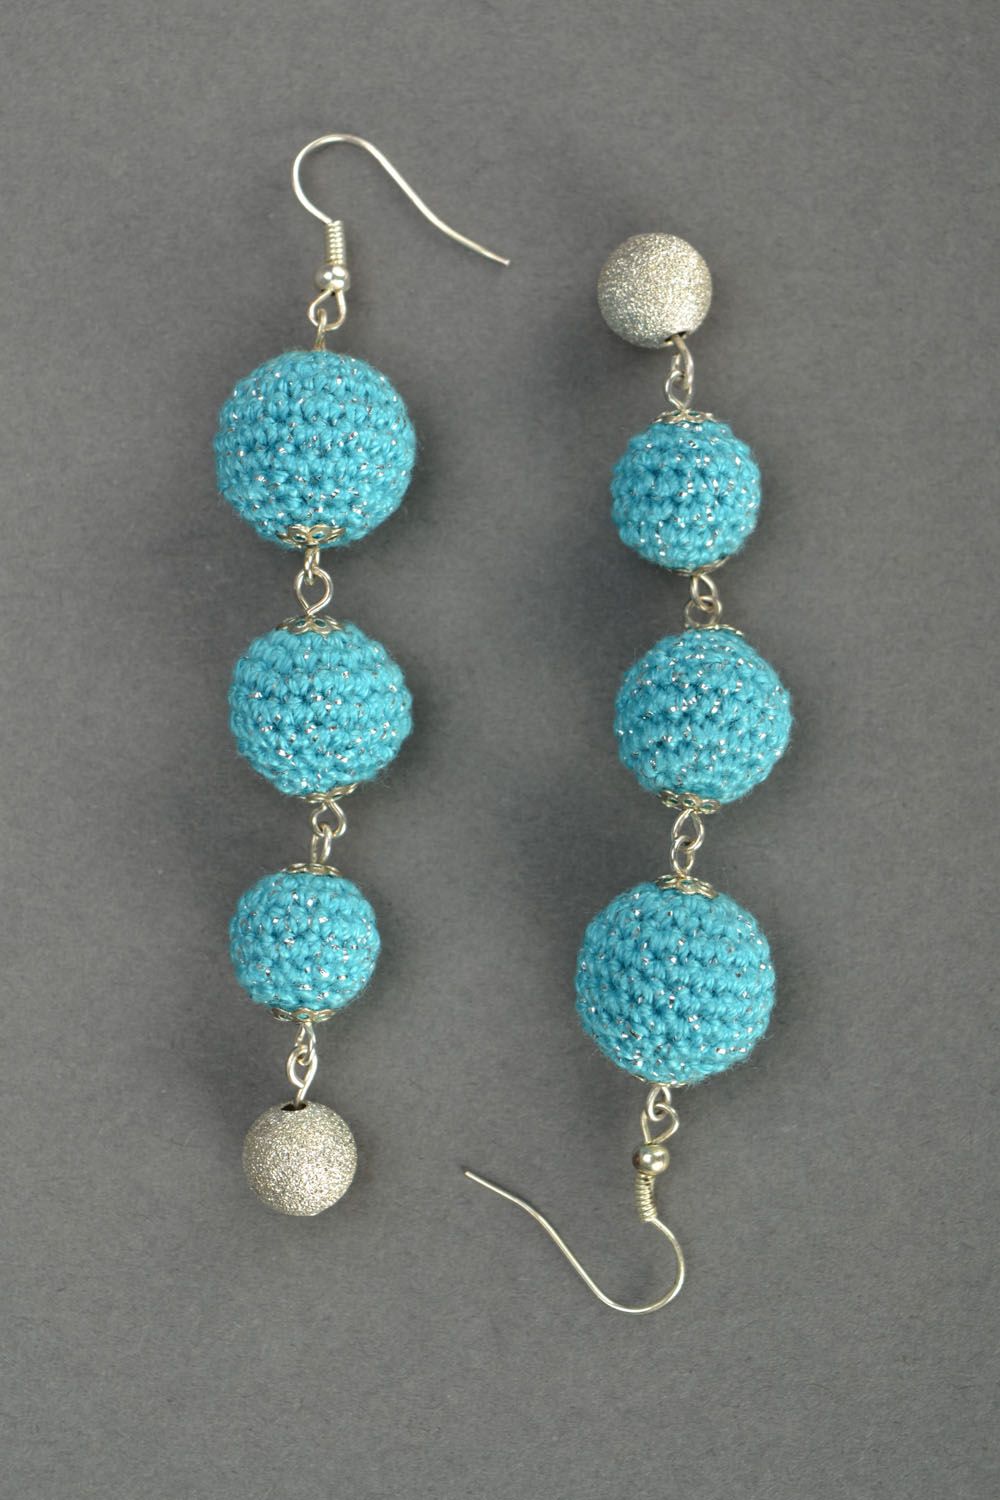 Crochet earrings Blue Snowballs photo 3